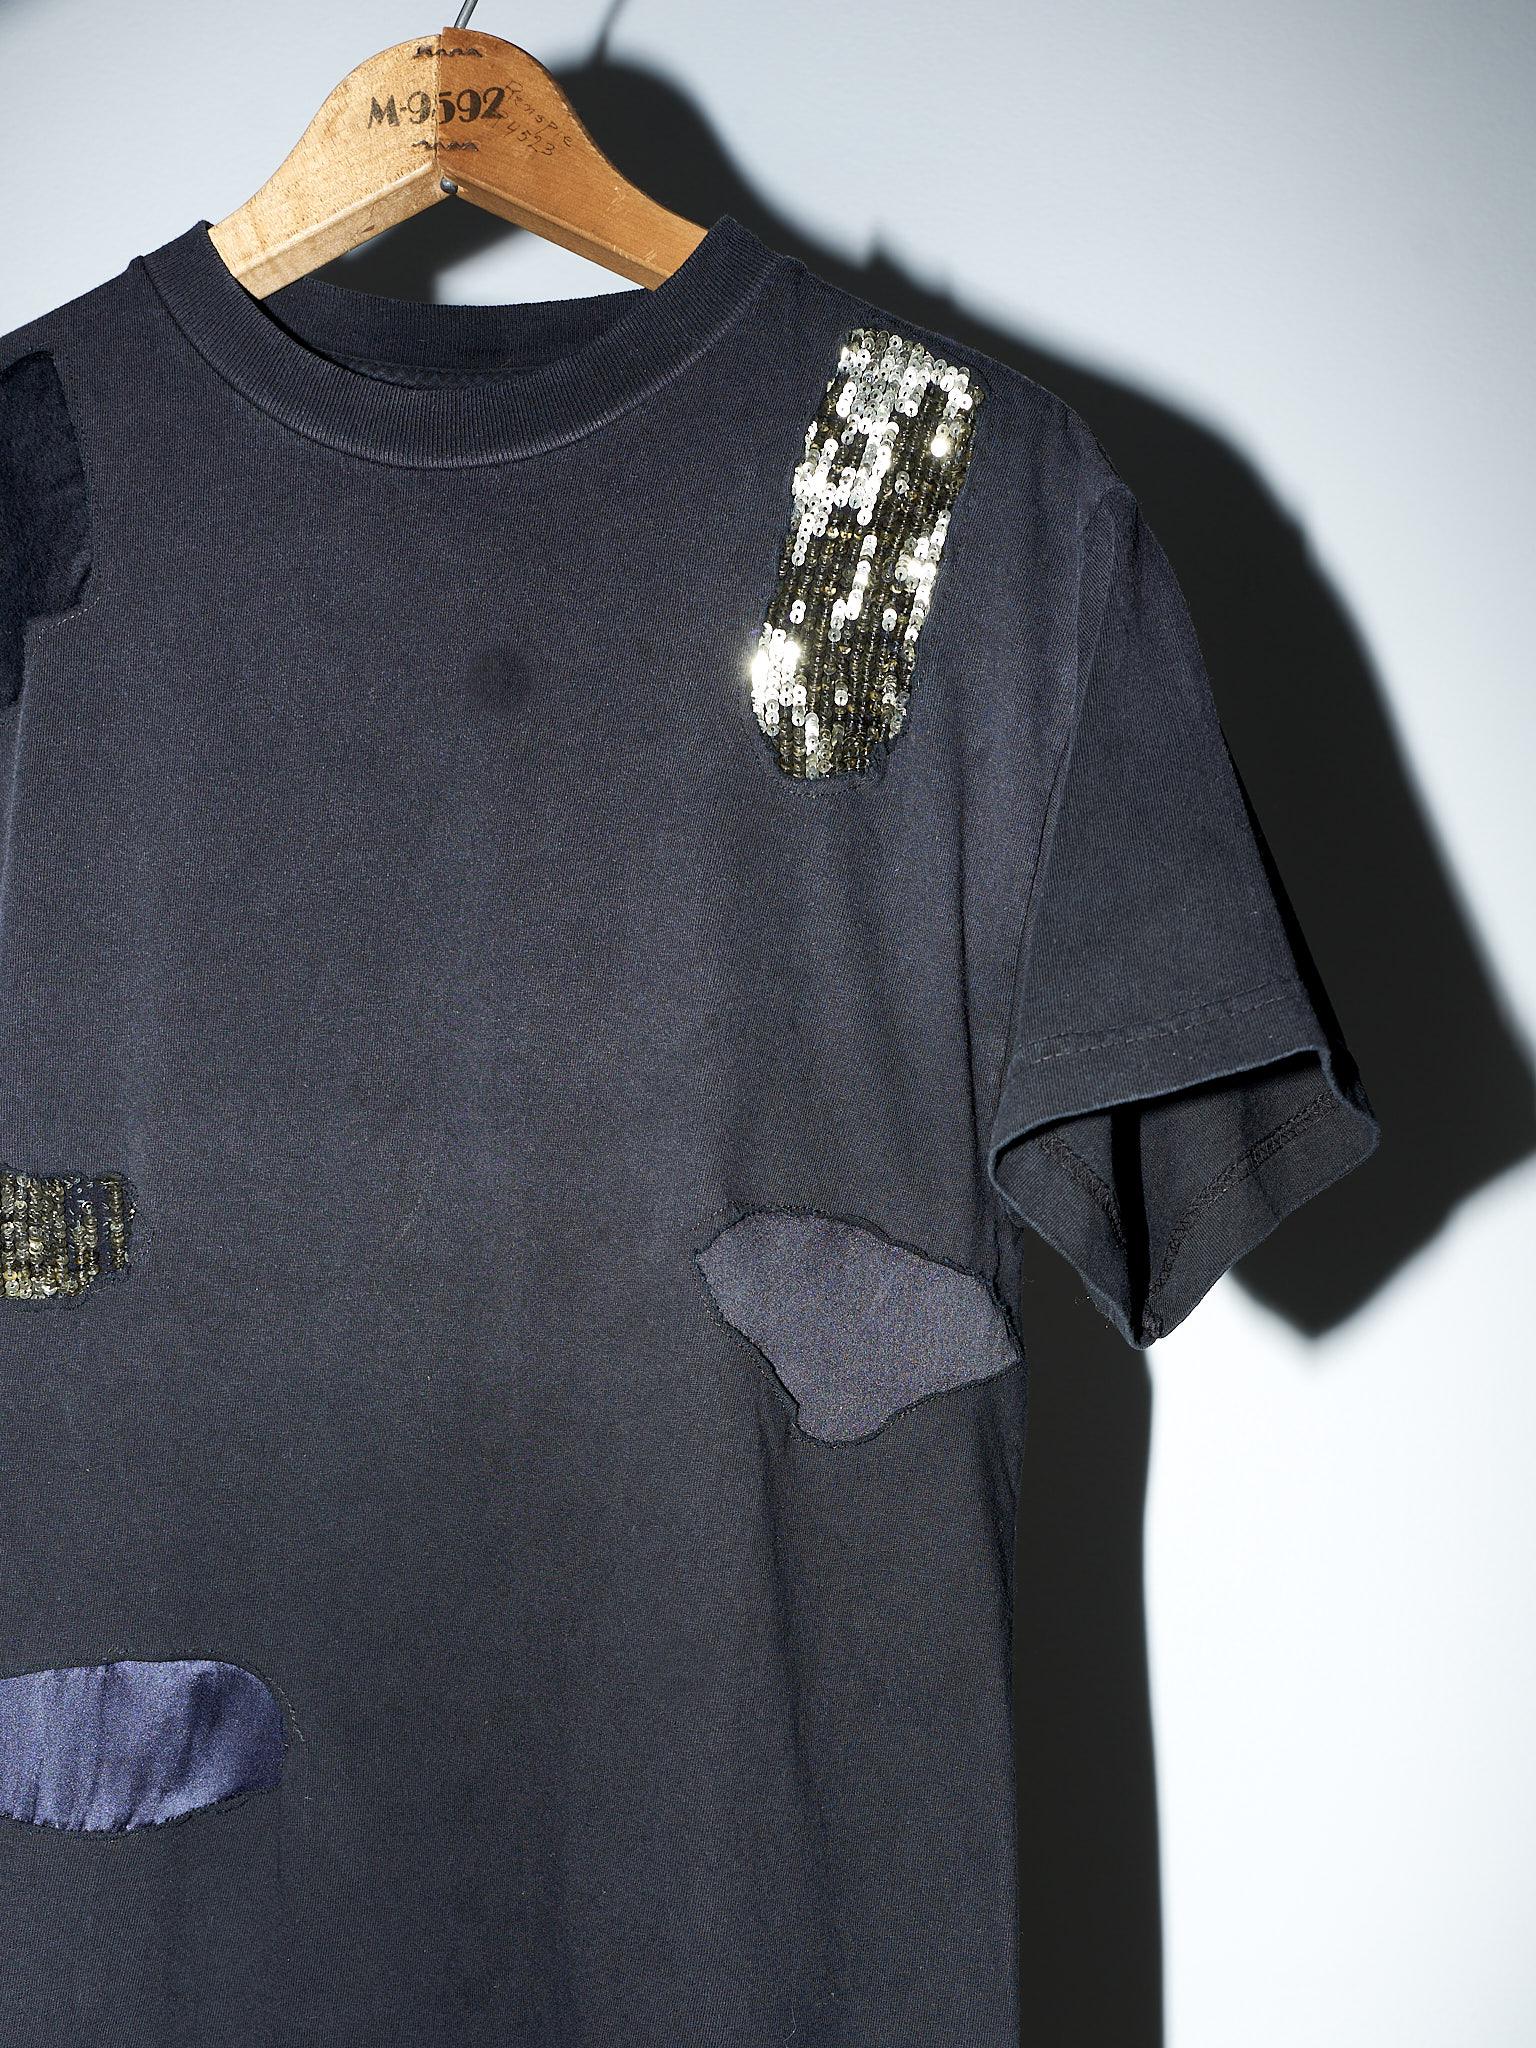 T-Shirt Black Embellished Sequin Silk Cotton Top J Dauphin 2